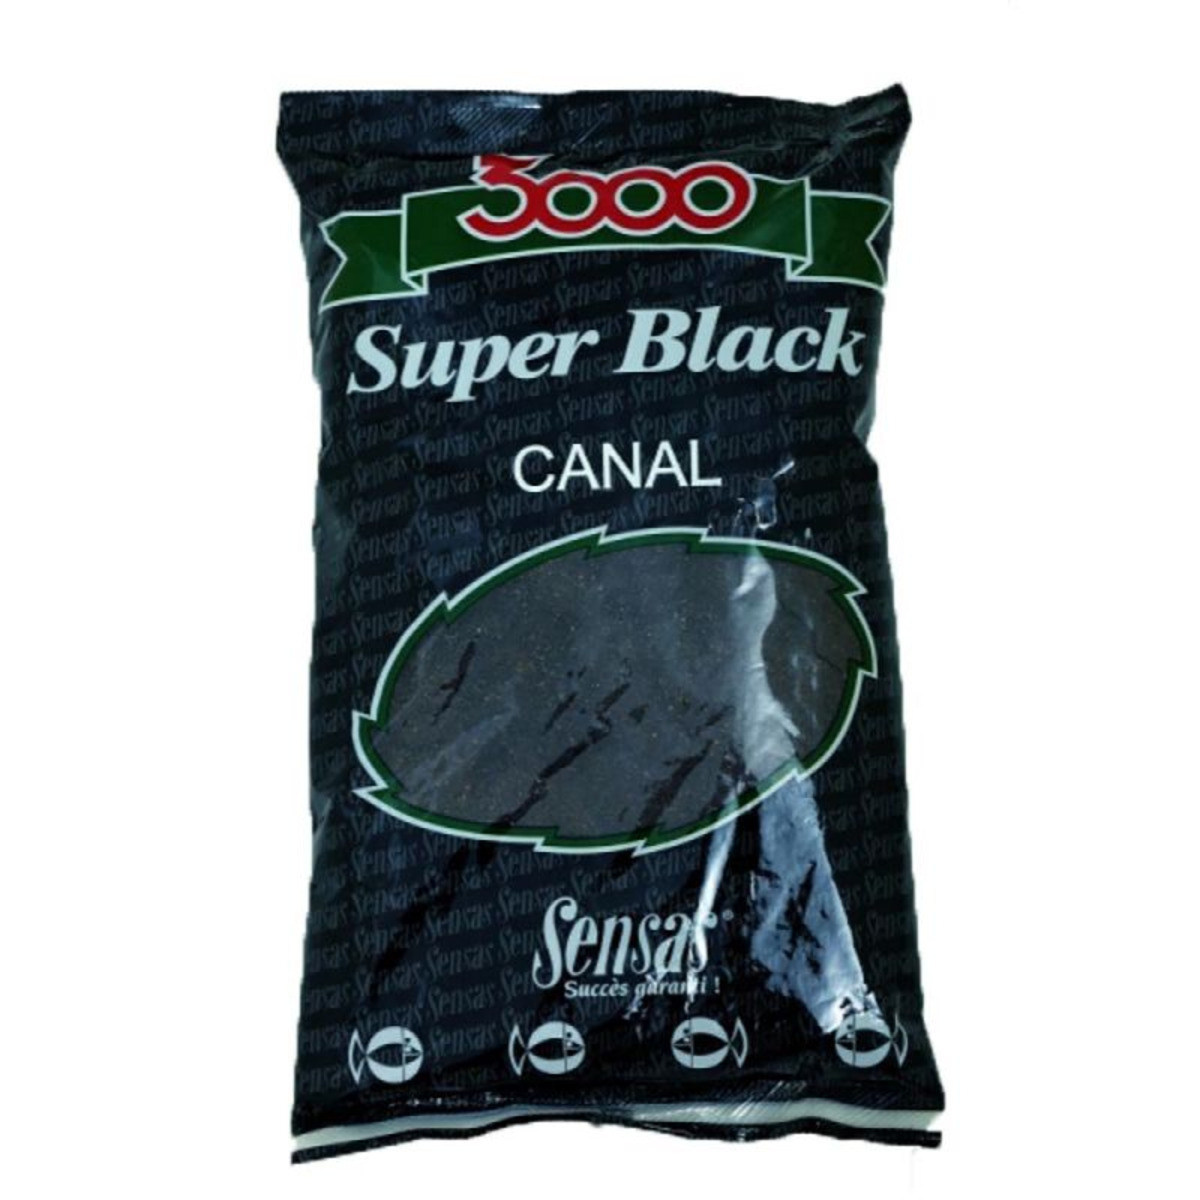 Sensas 3000 Super Black Canal - 1 kg